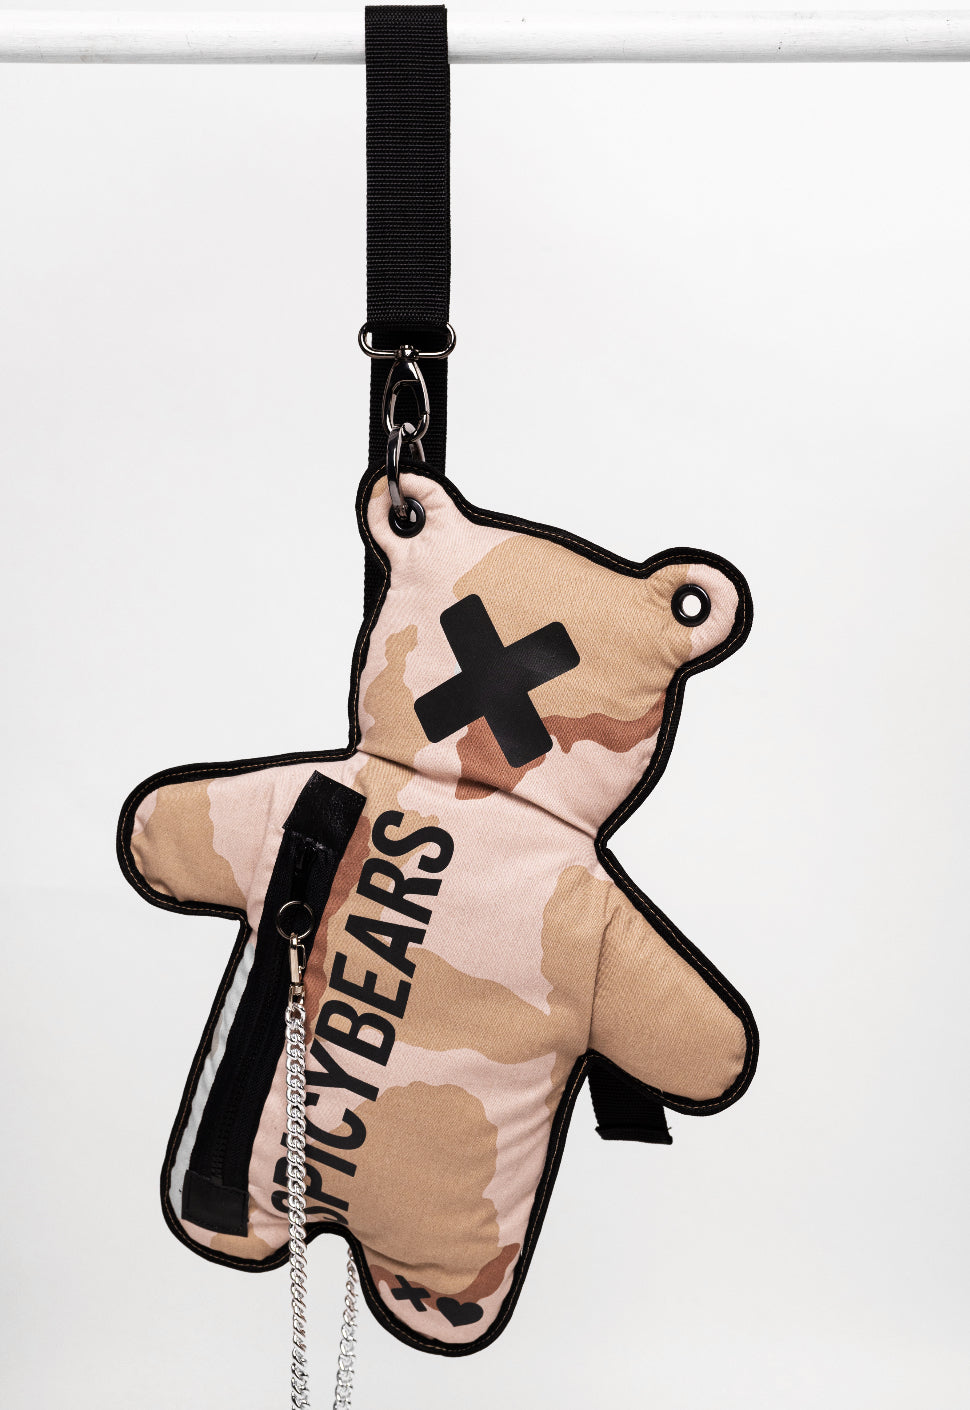 Unisex streetwear crossbody camo bear bag with black reflective accents